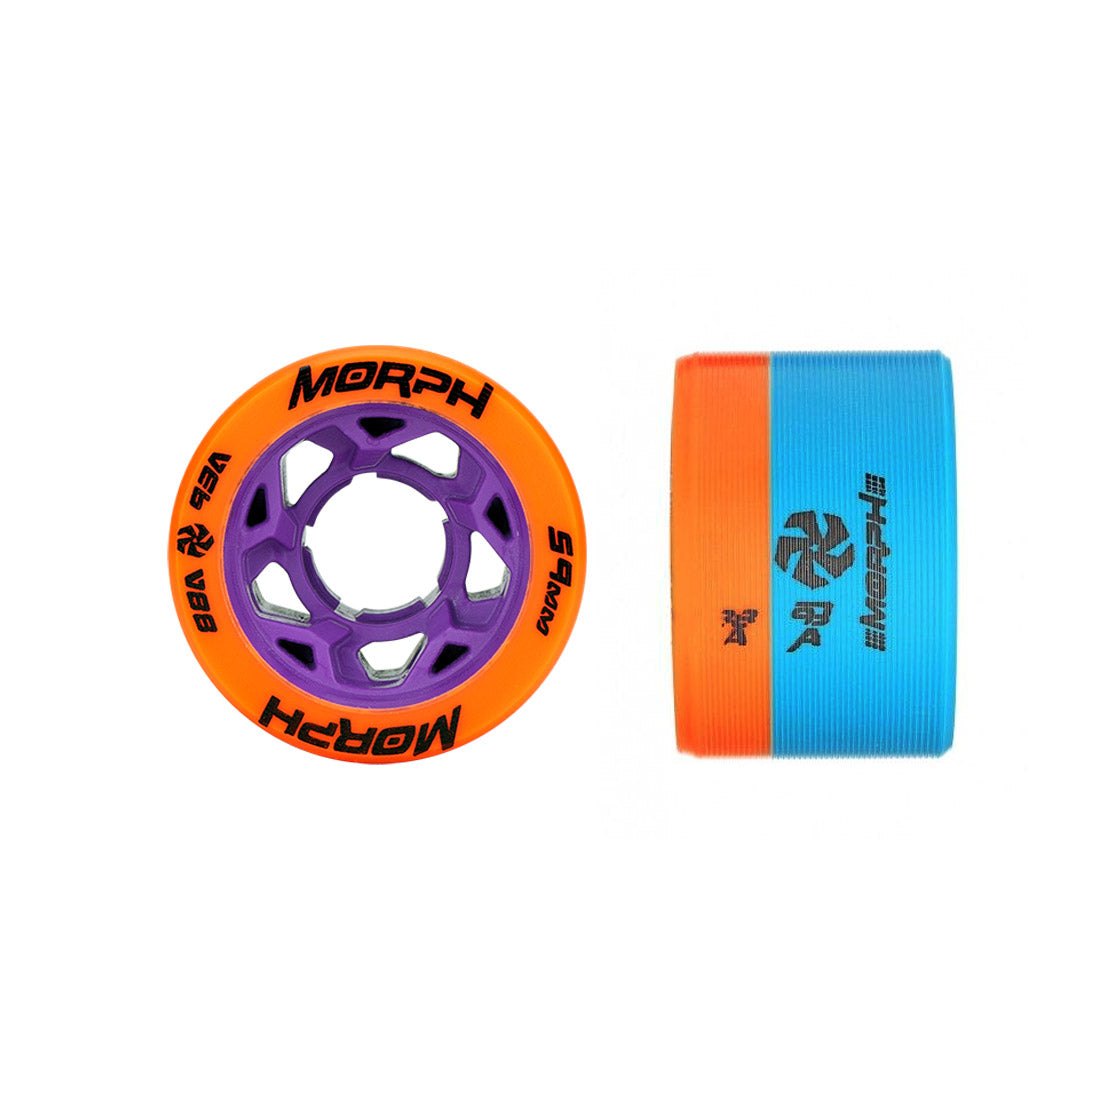 Reckless Morph Dual 59mm Wheels 4pk 88a 93a | Orange Blue Roller Skate Wheels